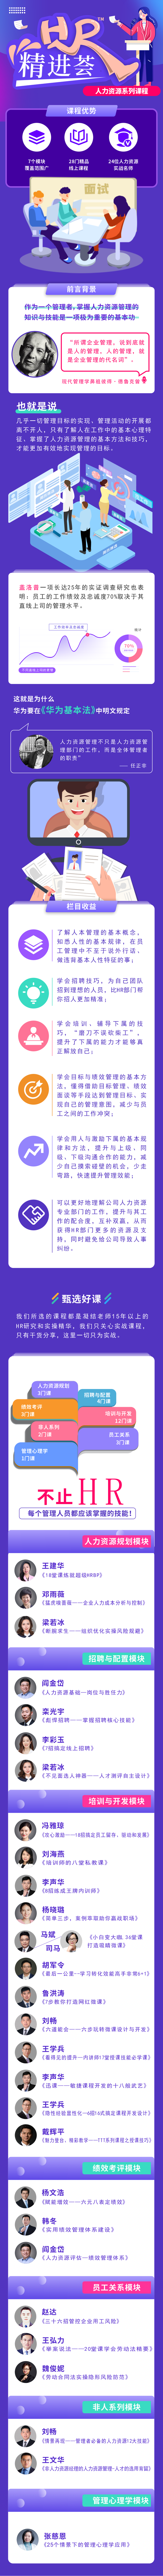 https://hs-1253359580.cos.ap-guangzhou.myqcloud.com/newhdp/live_cover/2763/7c49d21b706a44bb5432d947207b839e.png